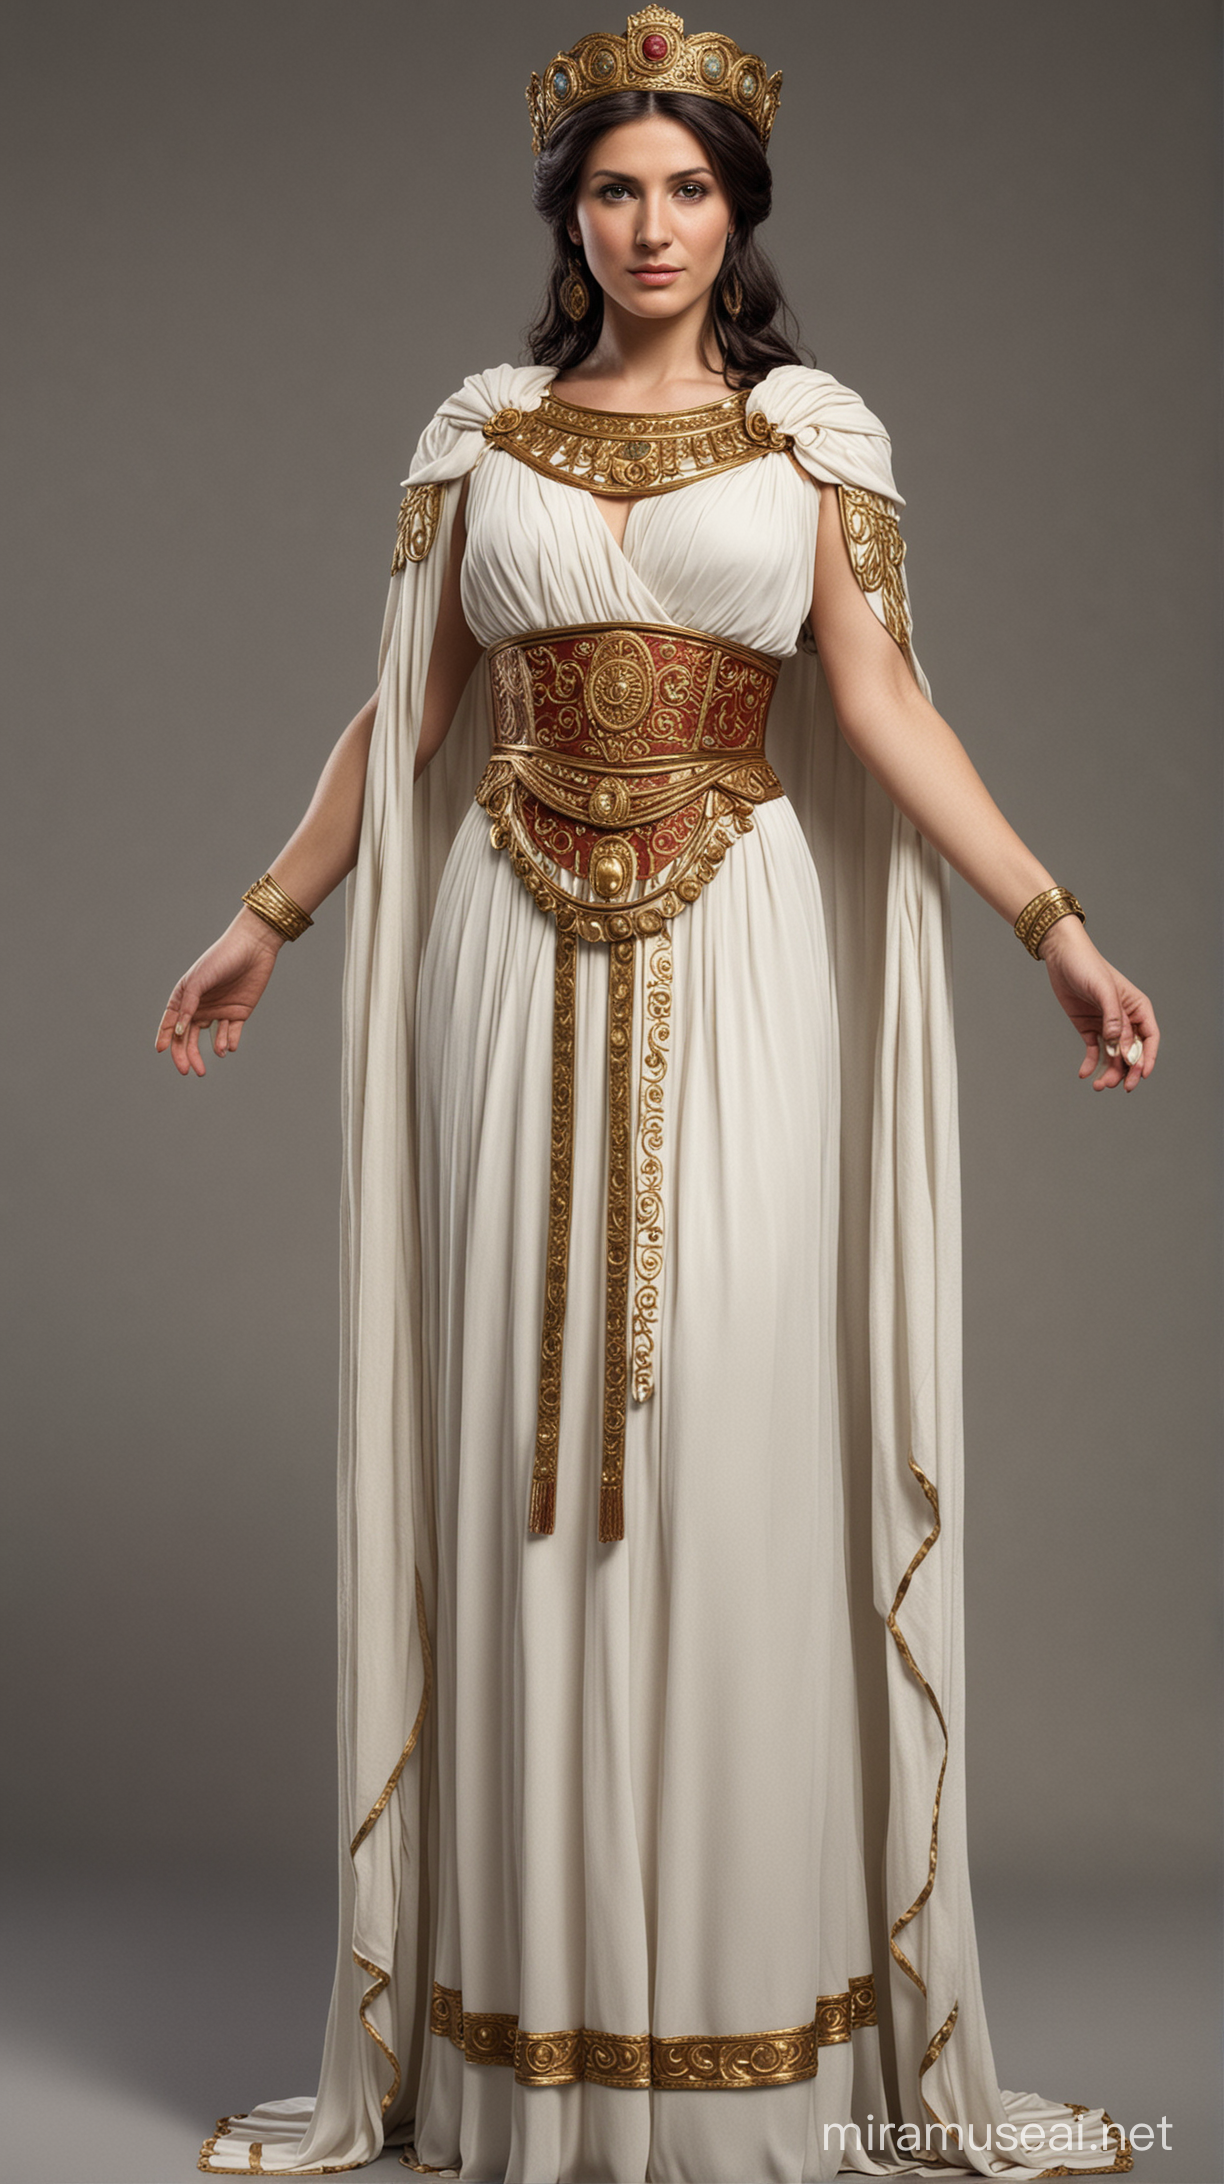 Roman Empress in Regal Attire Standing Proudly